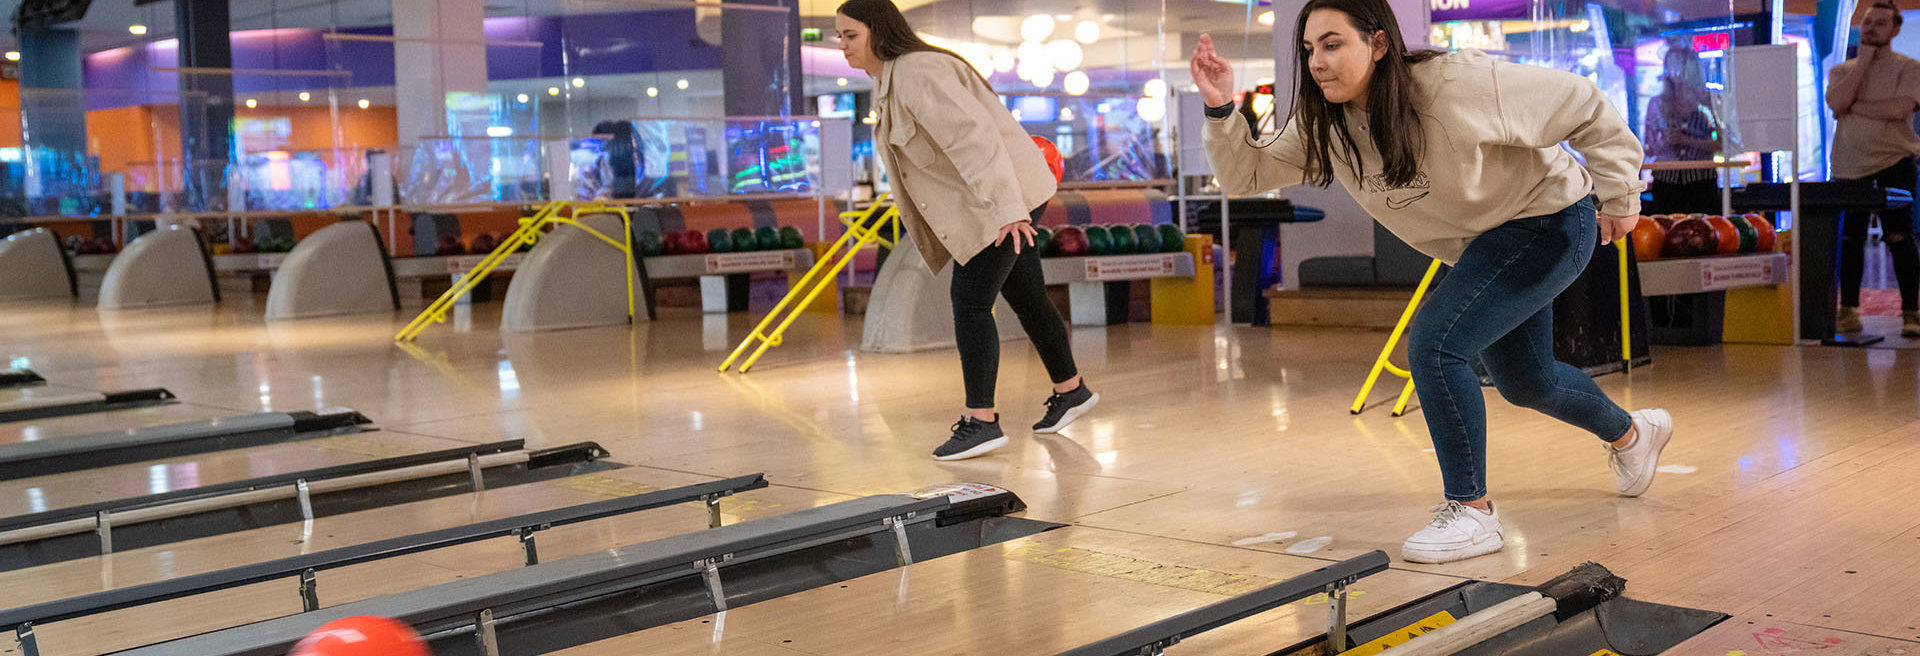 Two girls rolling bowling ball down a polished bowling lane